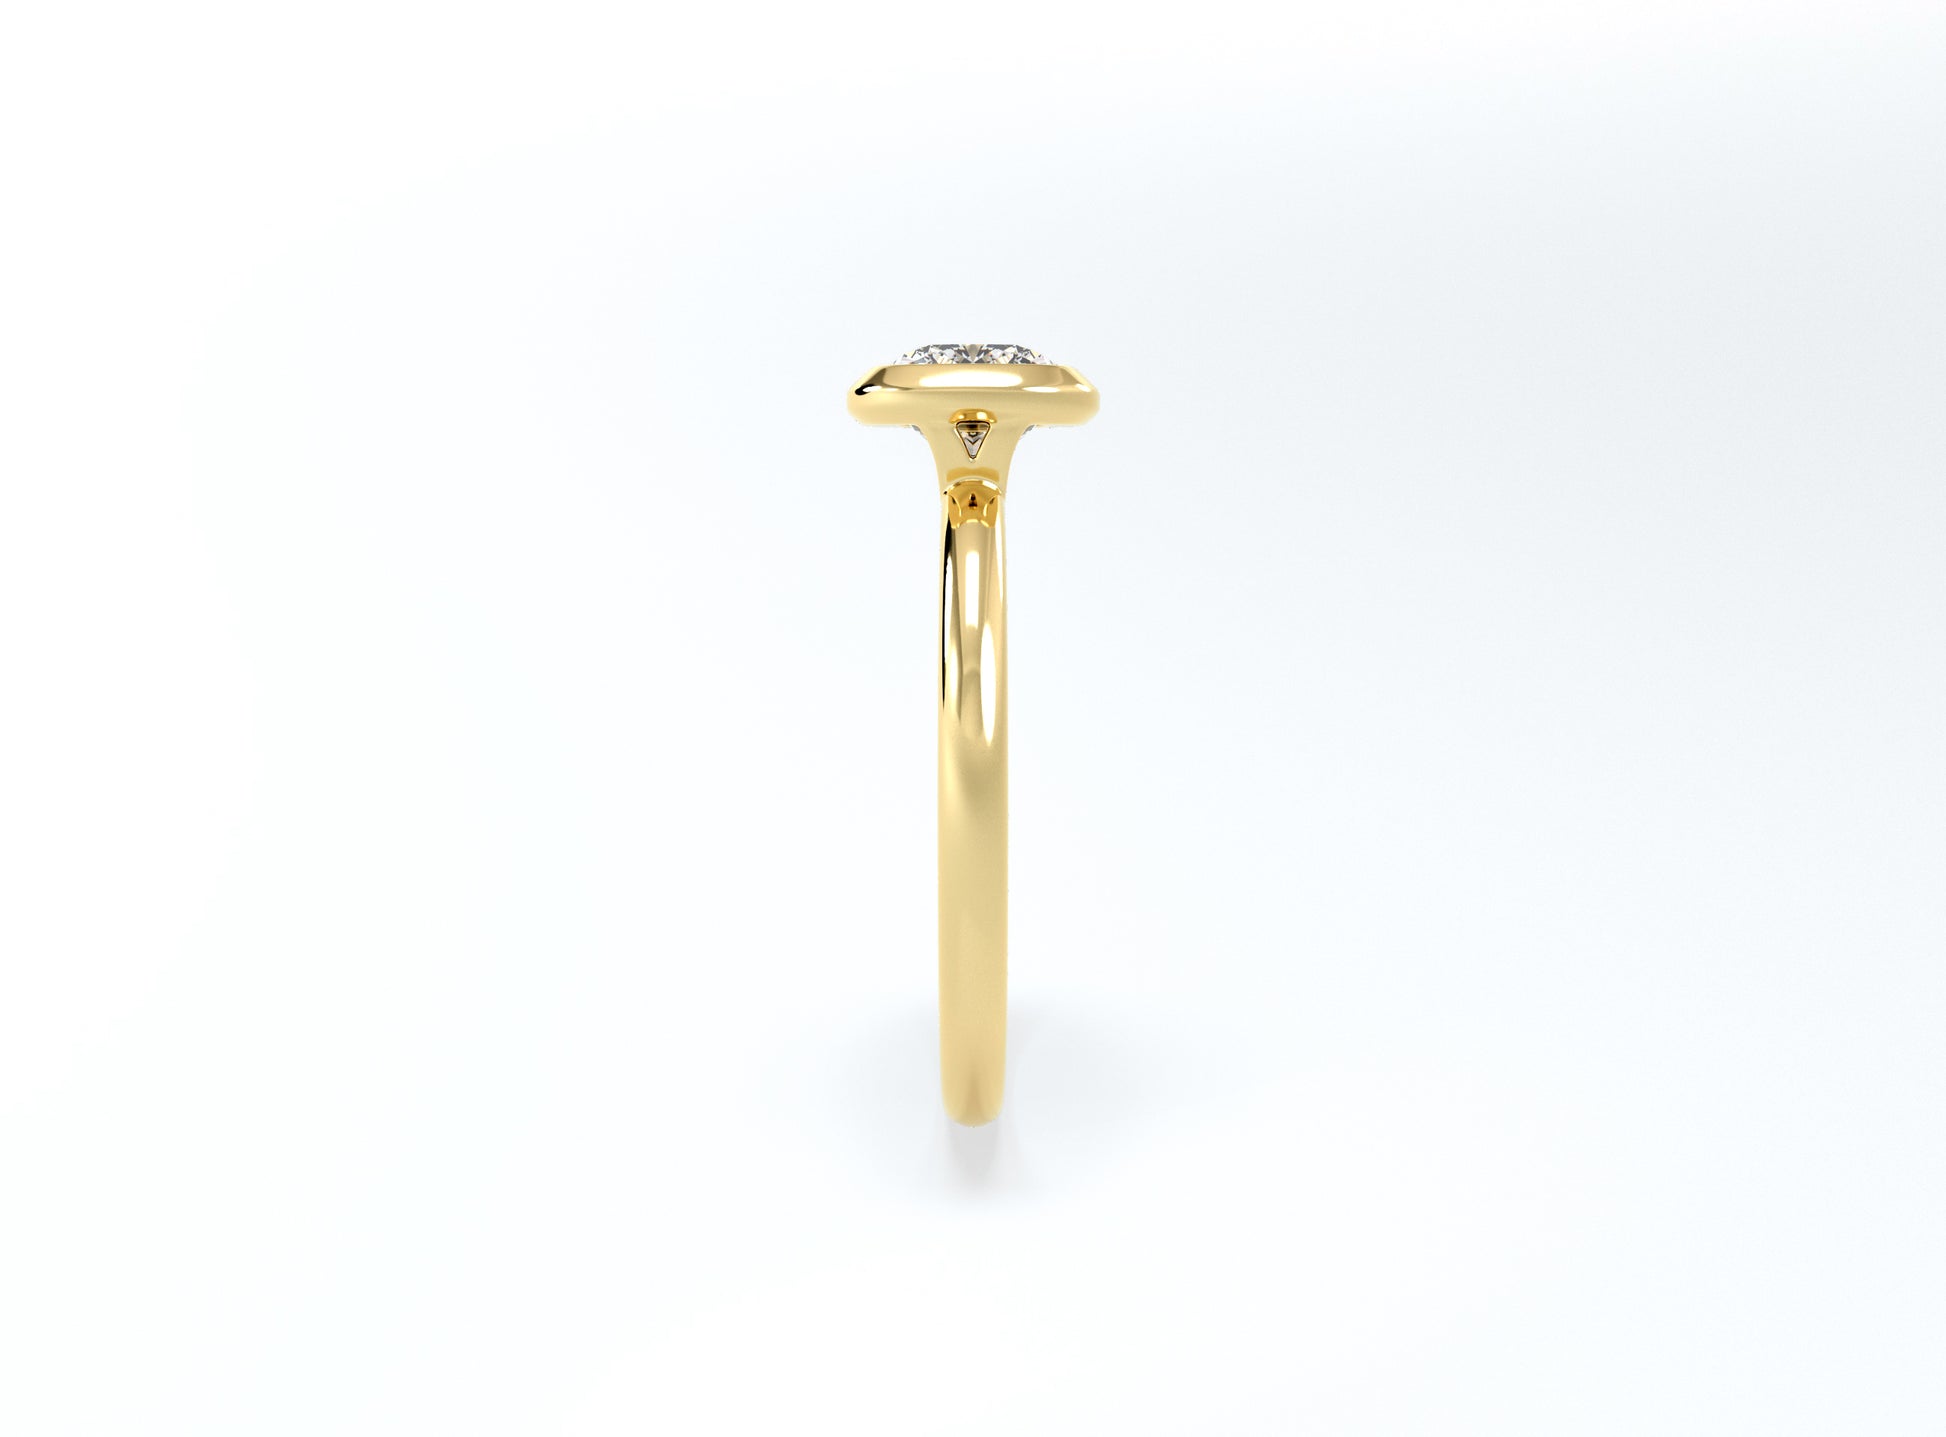 Bezel Set Cushion Cut Diamond Ring - Yellow Gold - Bodega